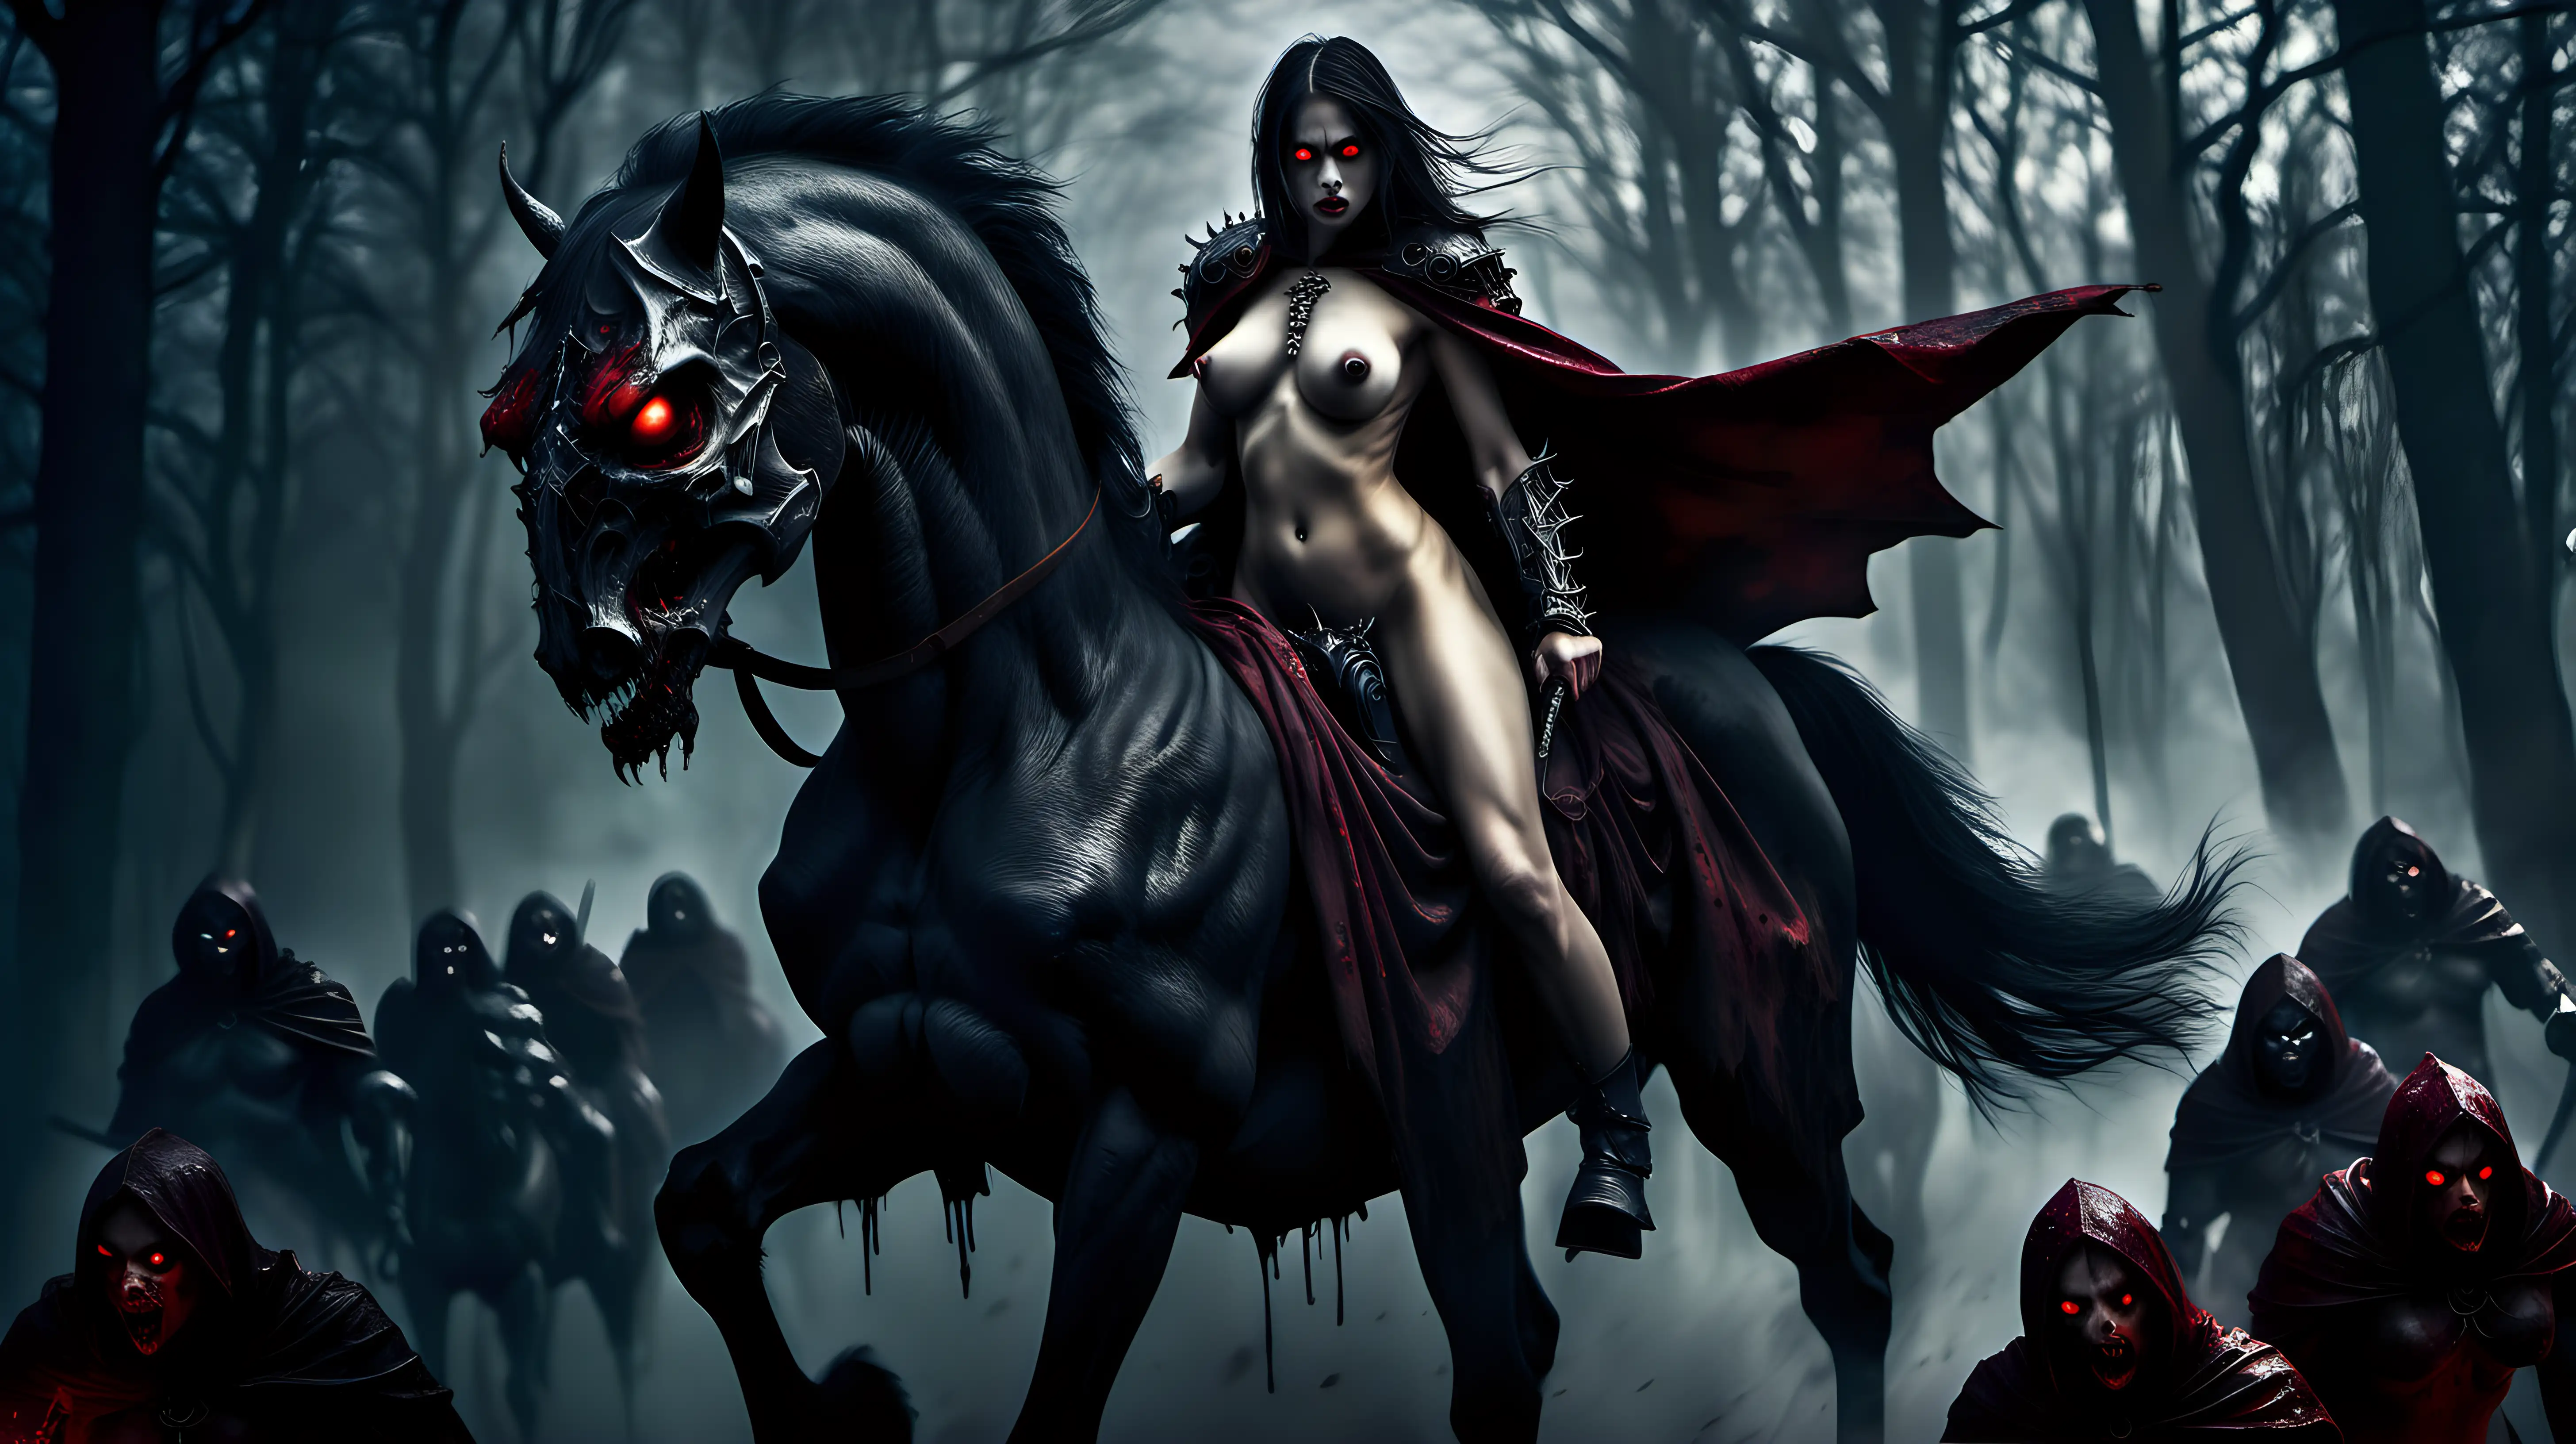 women riding dark armored horse, naked, muscular, evil, cape, bloody, night, evil forest, bloody, dark fantasy, holding skull in hand, red eyes, dark magic, mist, female minions,